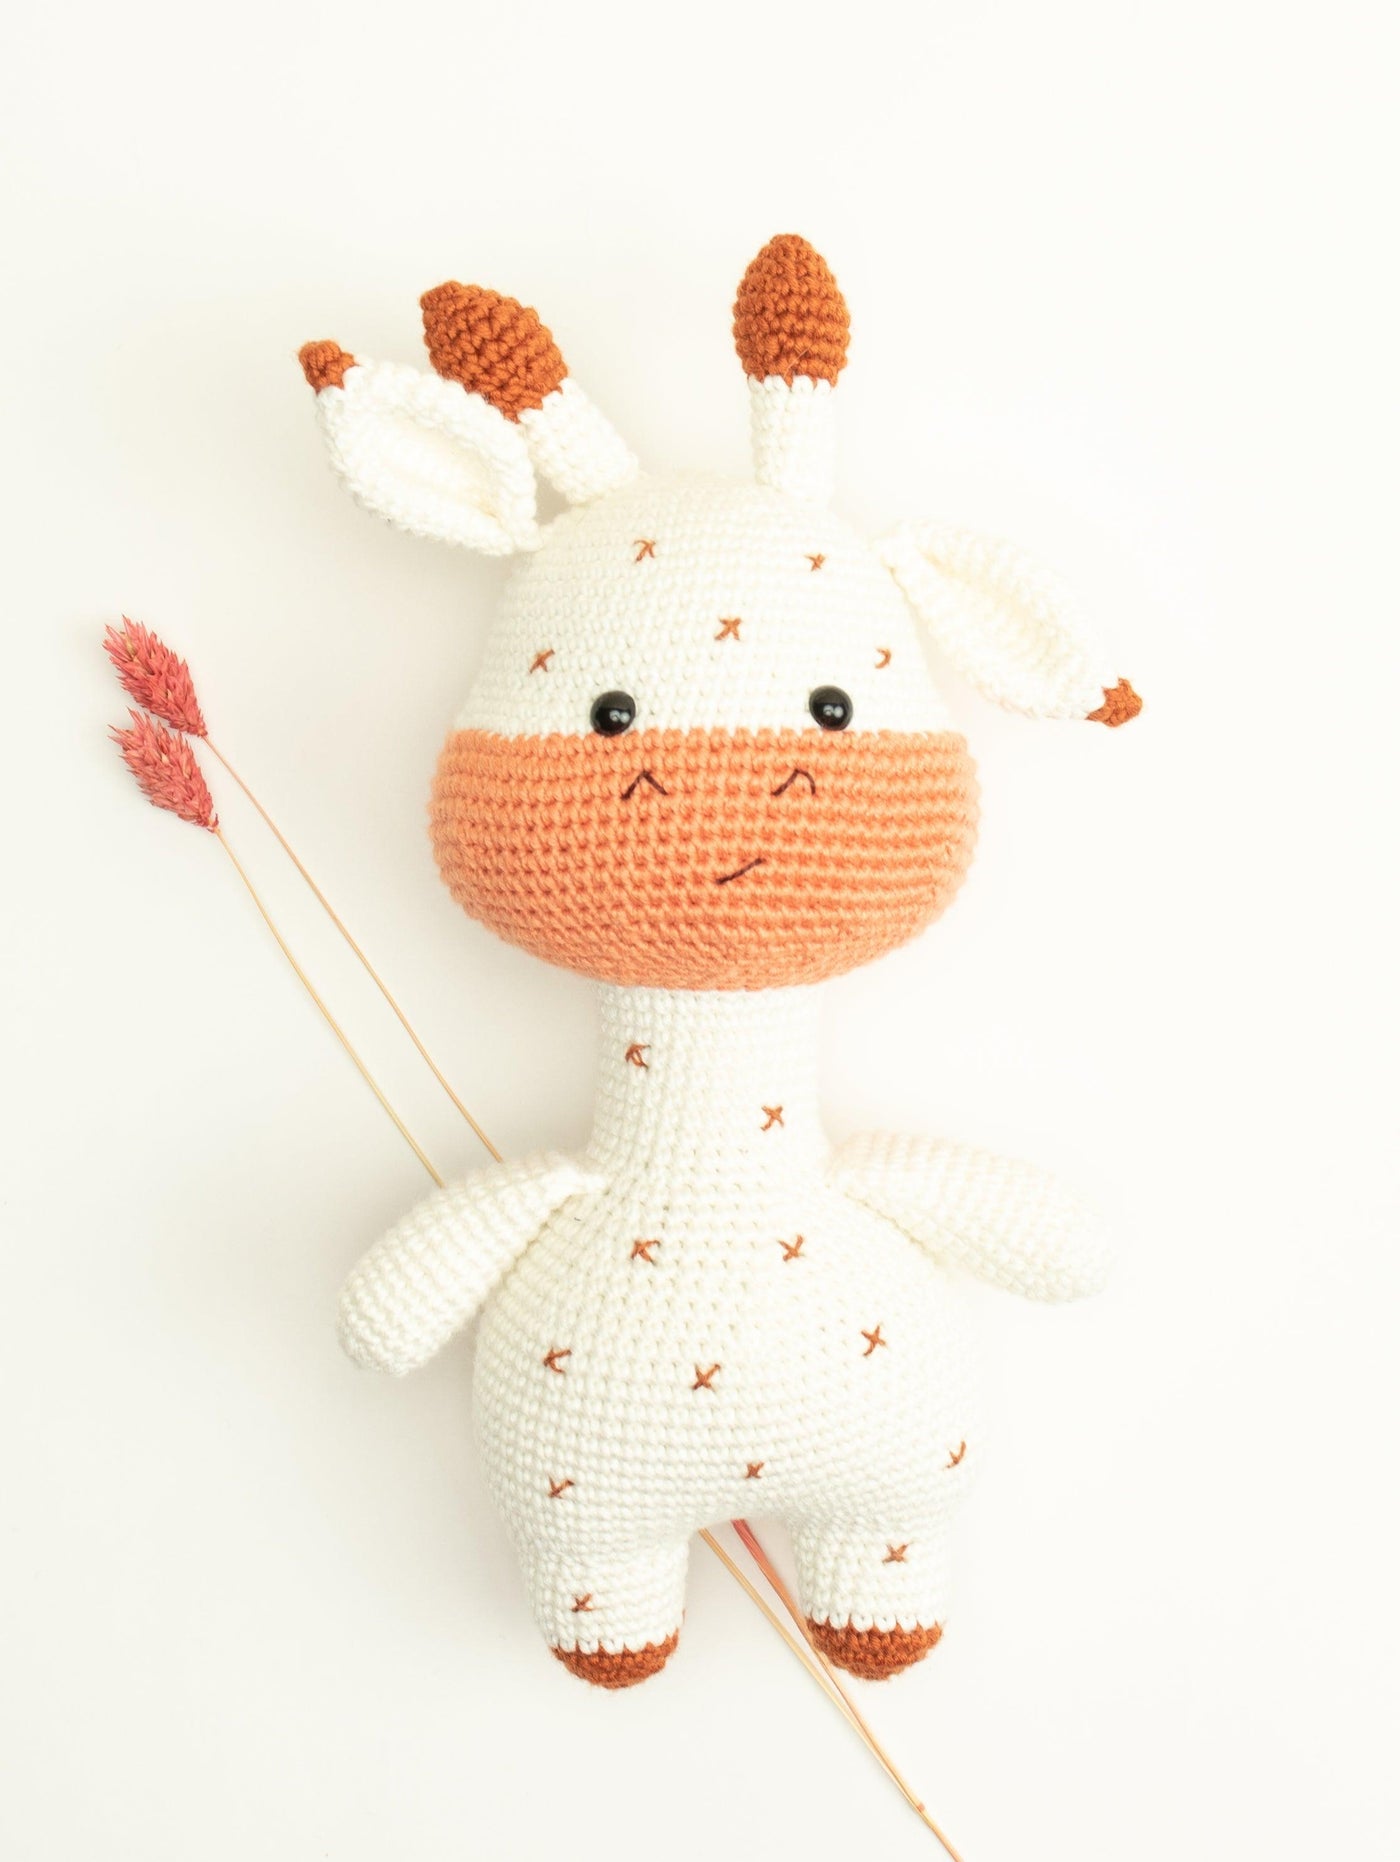 Crochet Doll - Gio the giraffe by Little Moy - Vysn